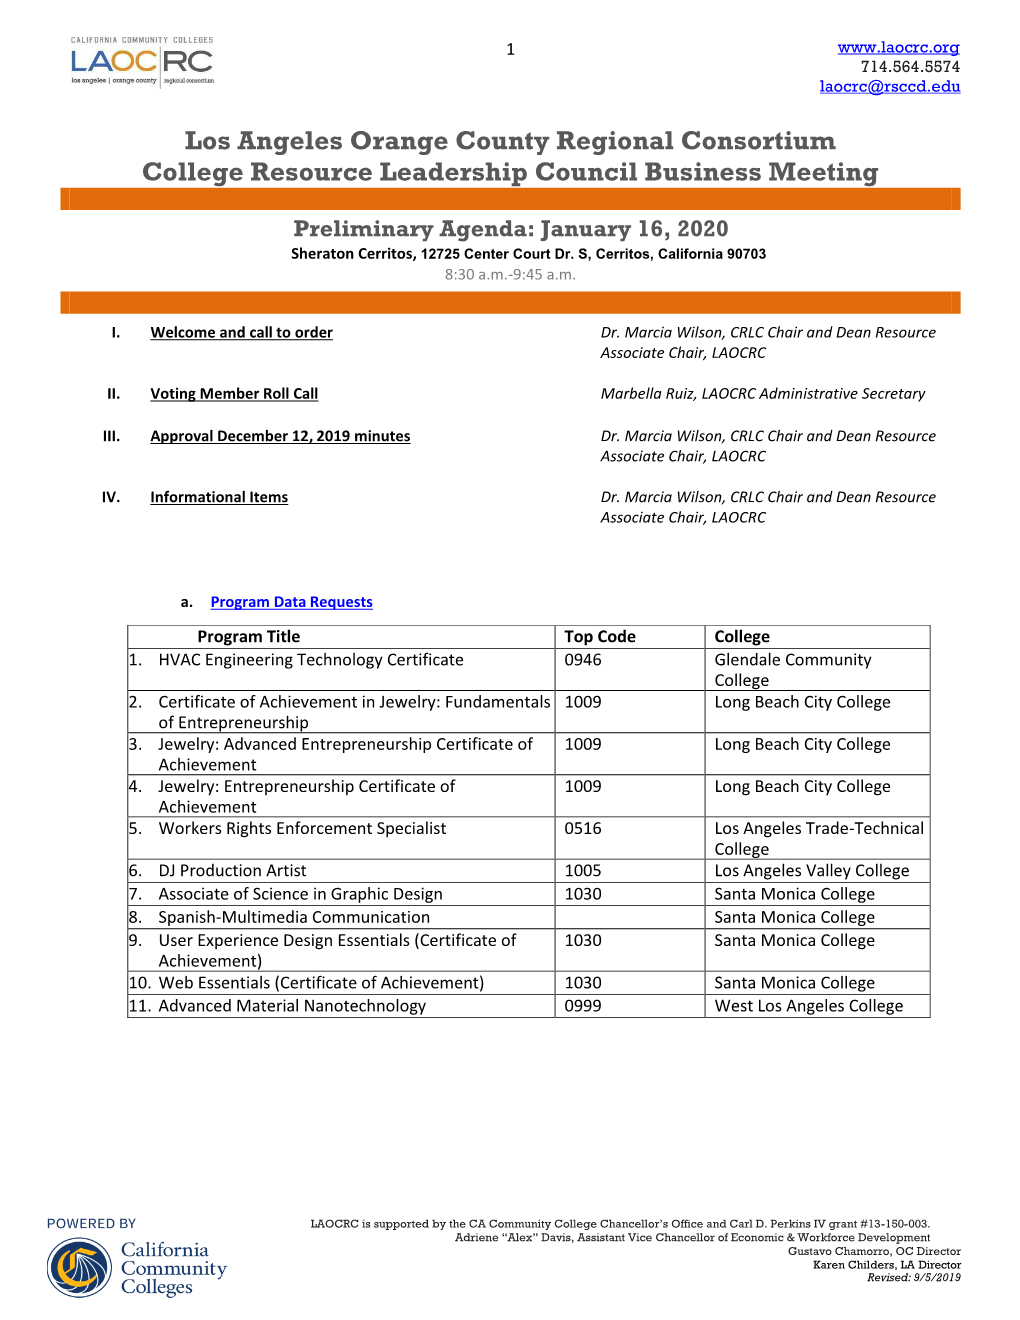 Los Angeles Orange County Regional Consortium College Resource Leadership Council Business Meeting